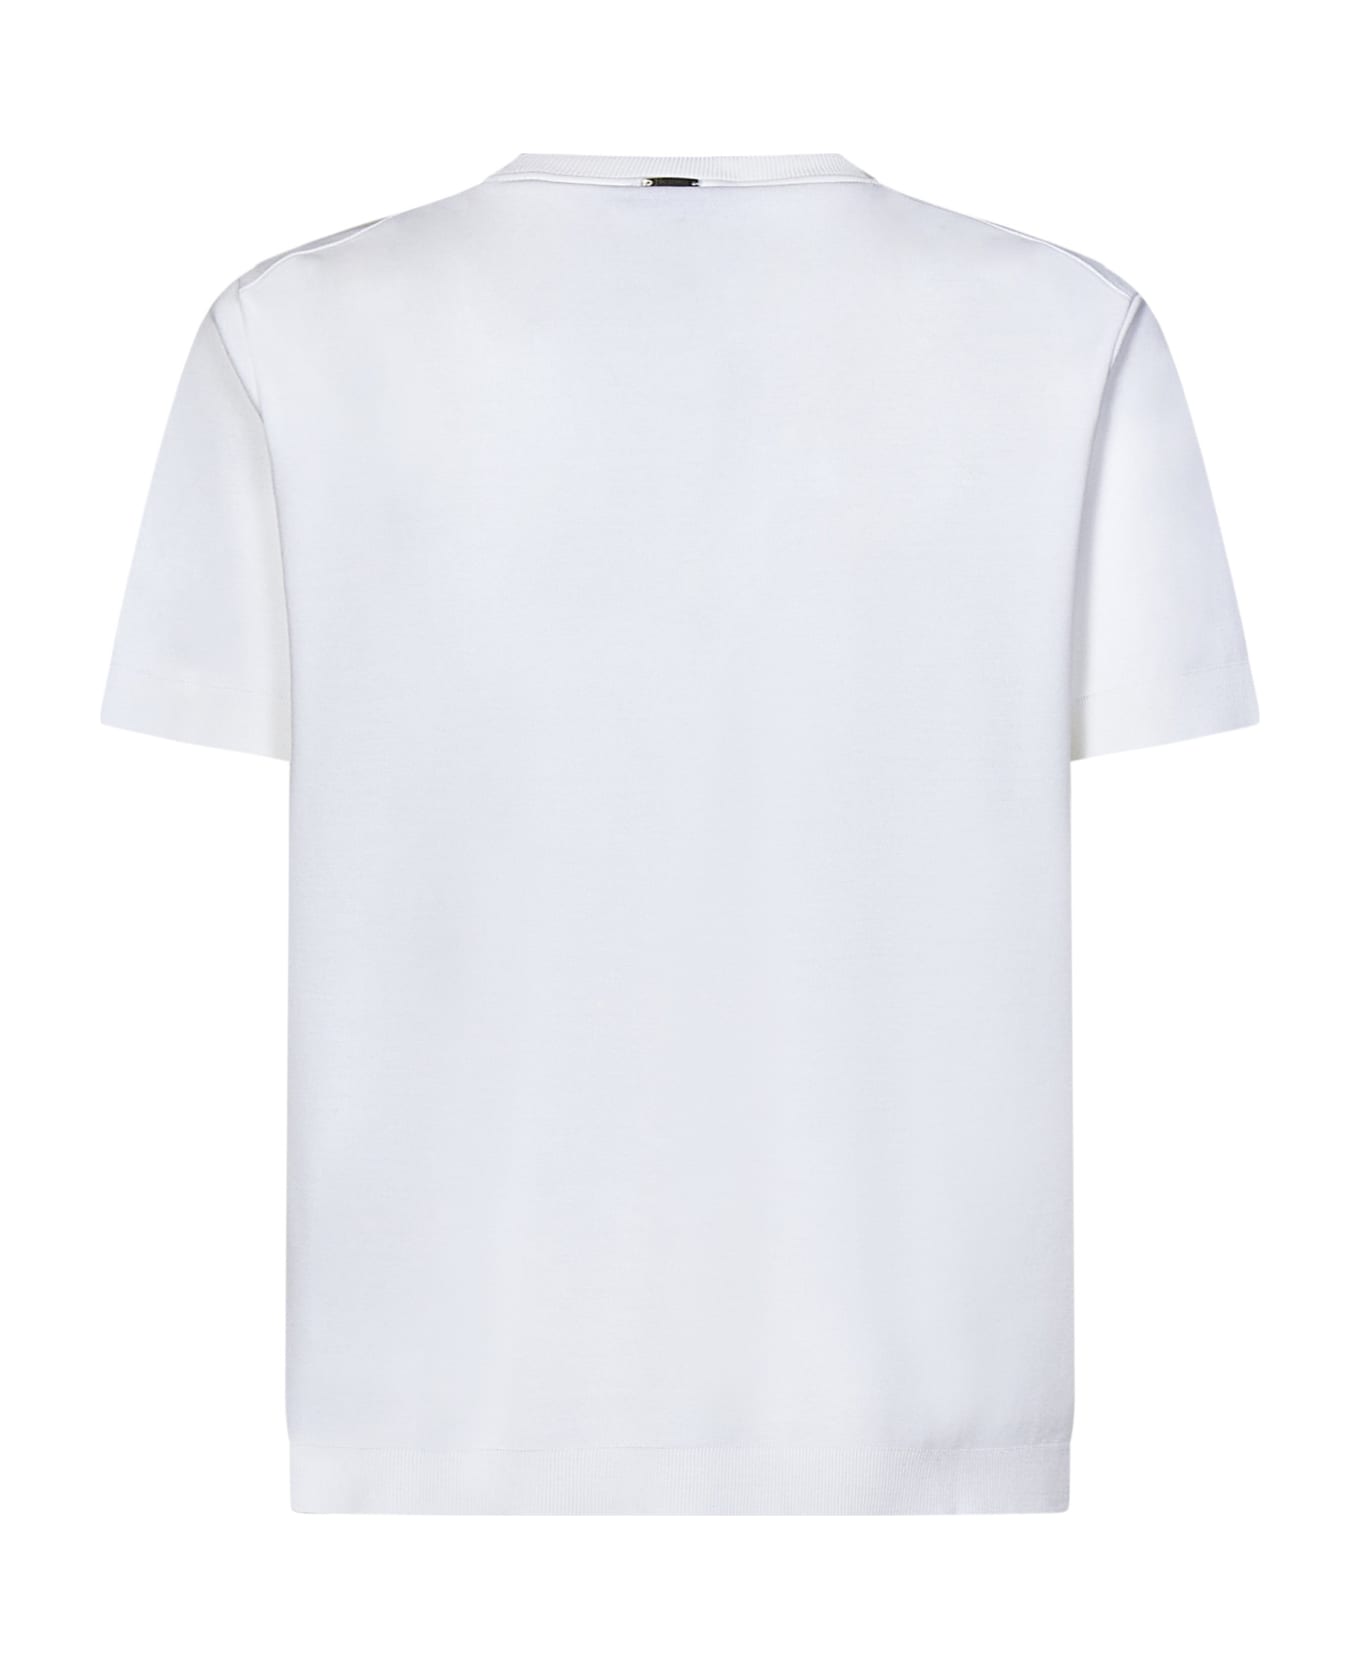 Herno T-shirt - White シャツ